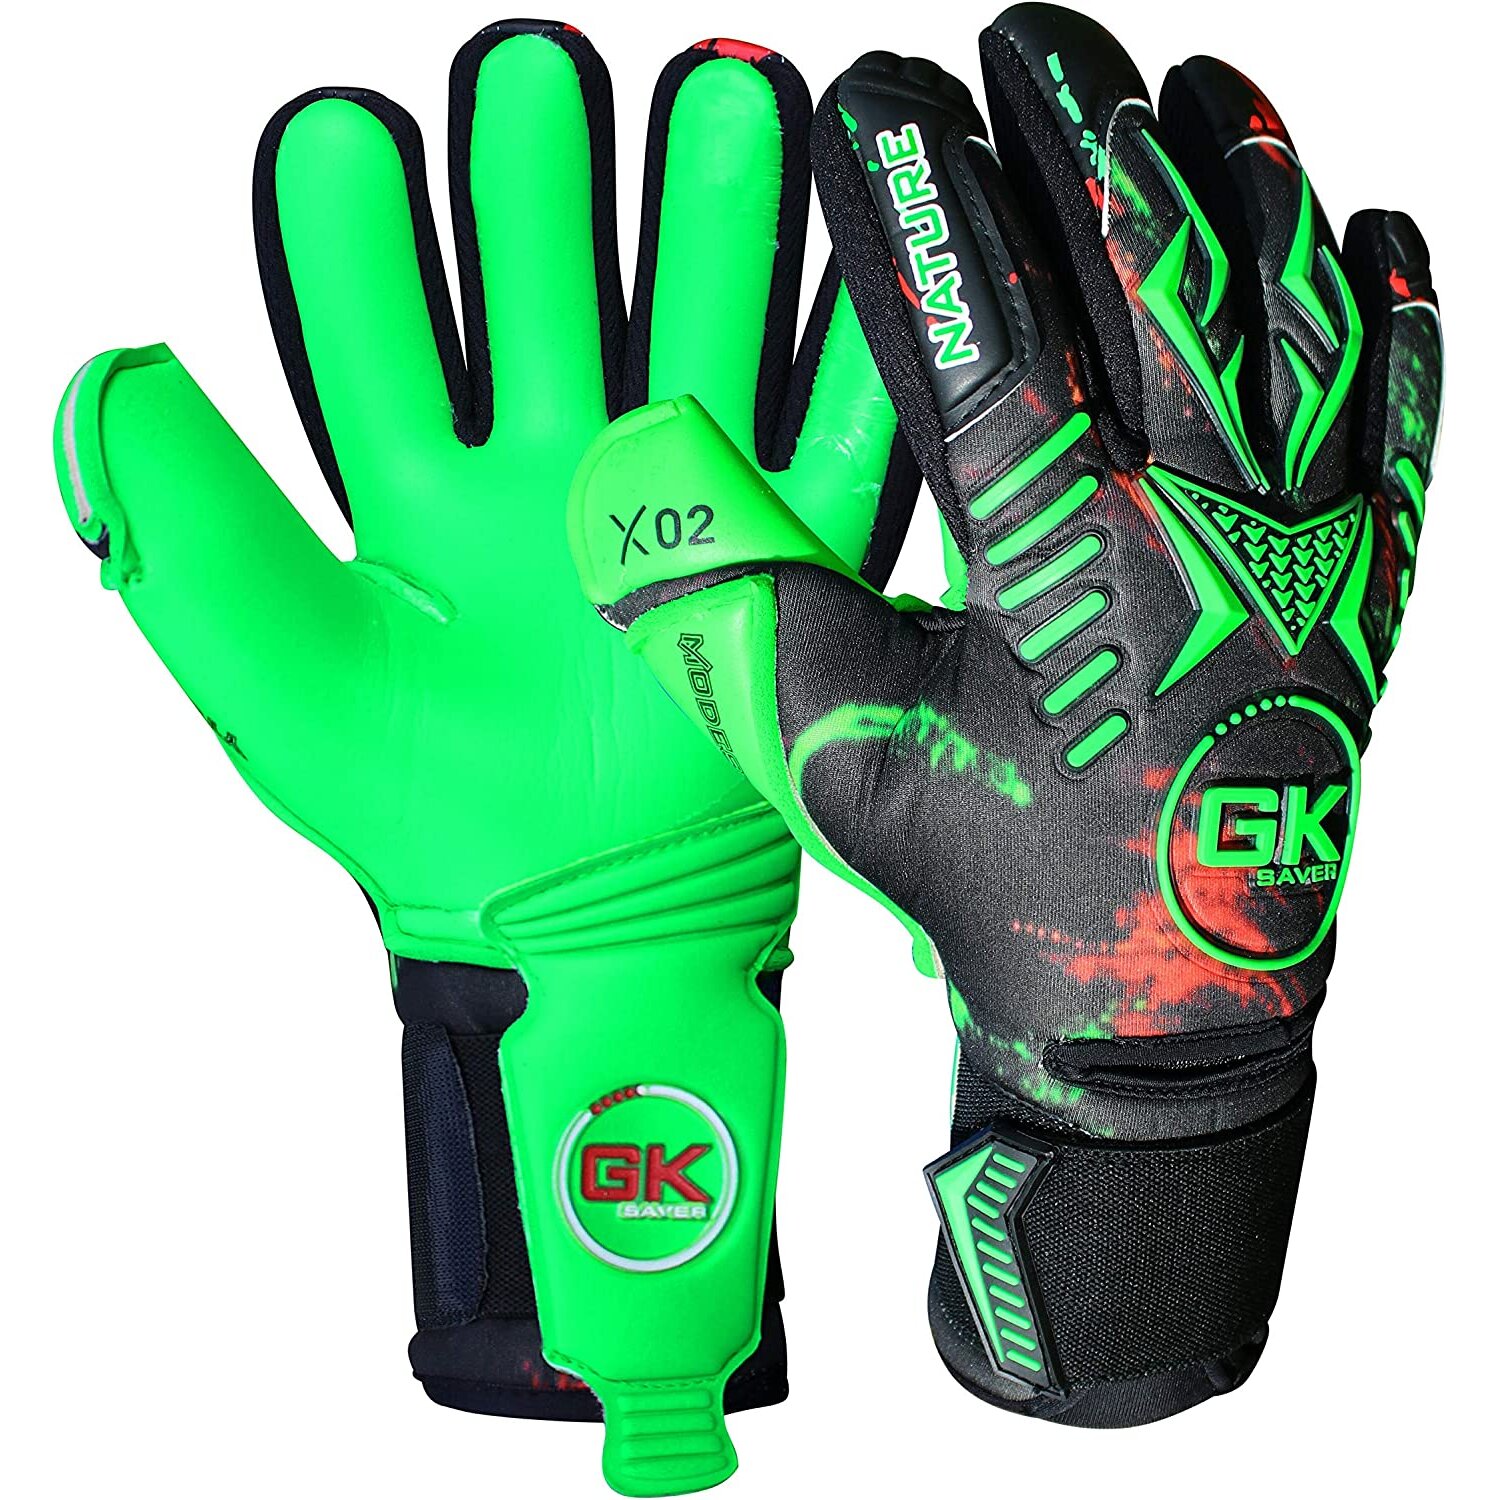 GK Saver Football Goalkeeper Gloves Modesty X02 Nature Professional Goalkeeper Gloves